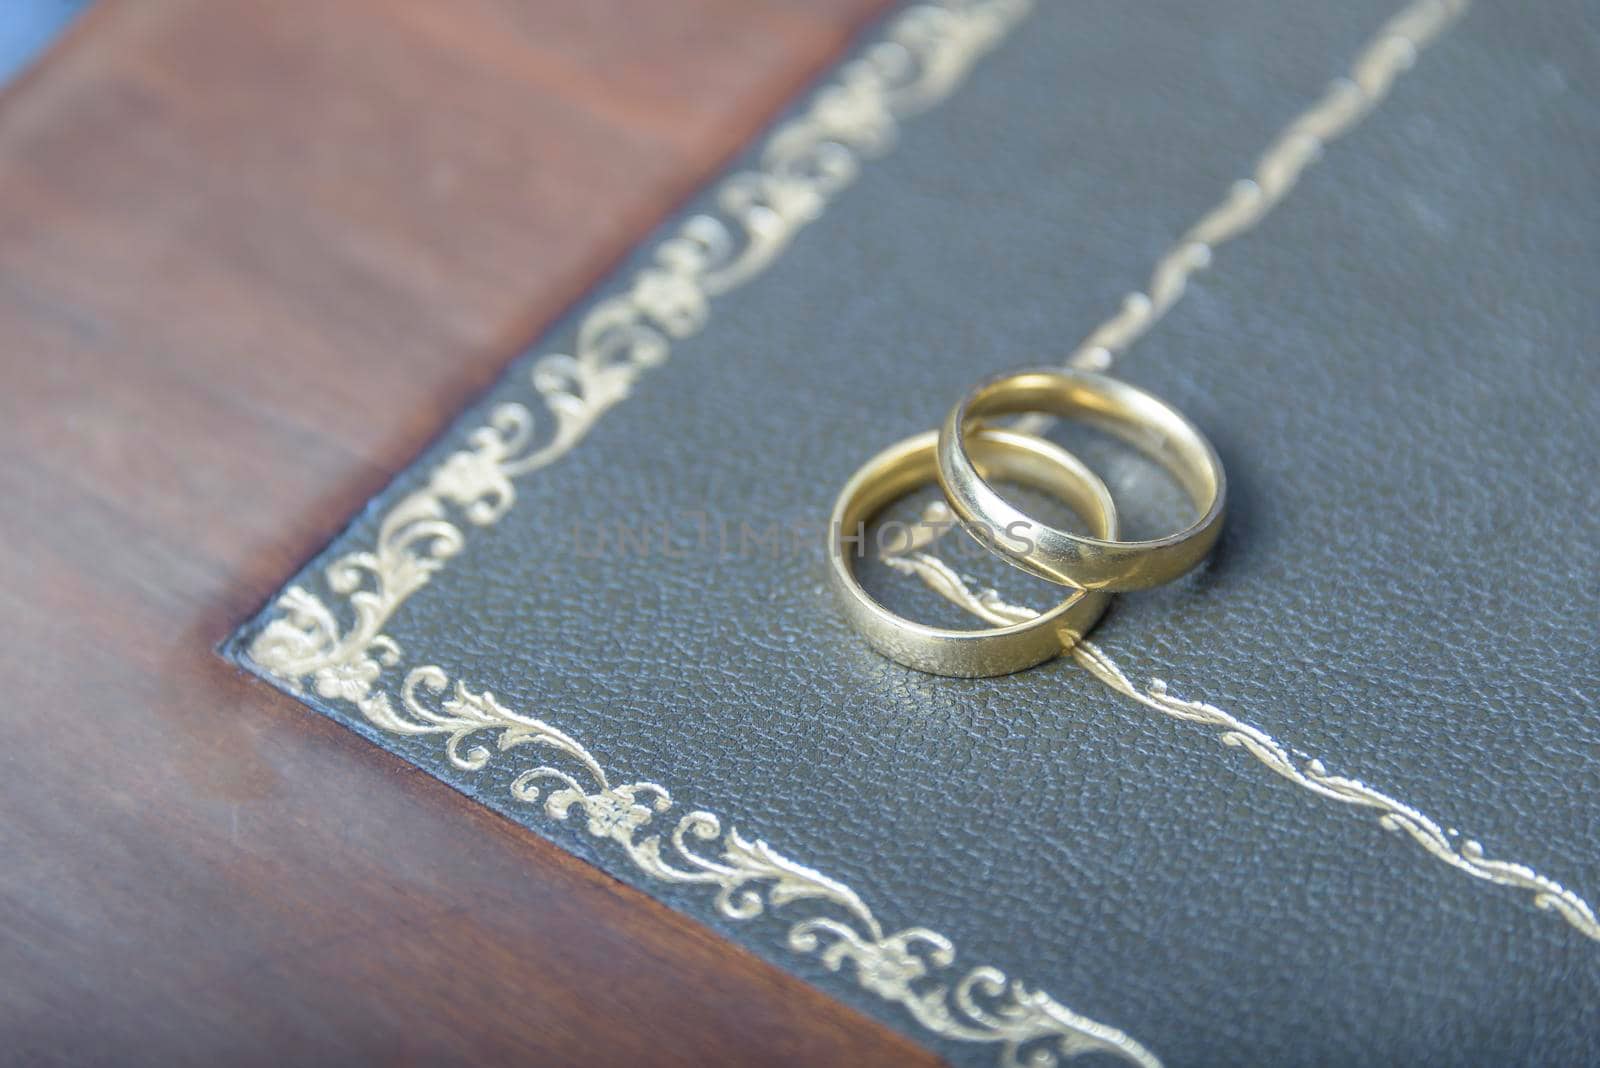 Golden wedding rings with judge gavel, closeup. by jbruiz78